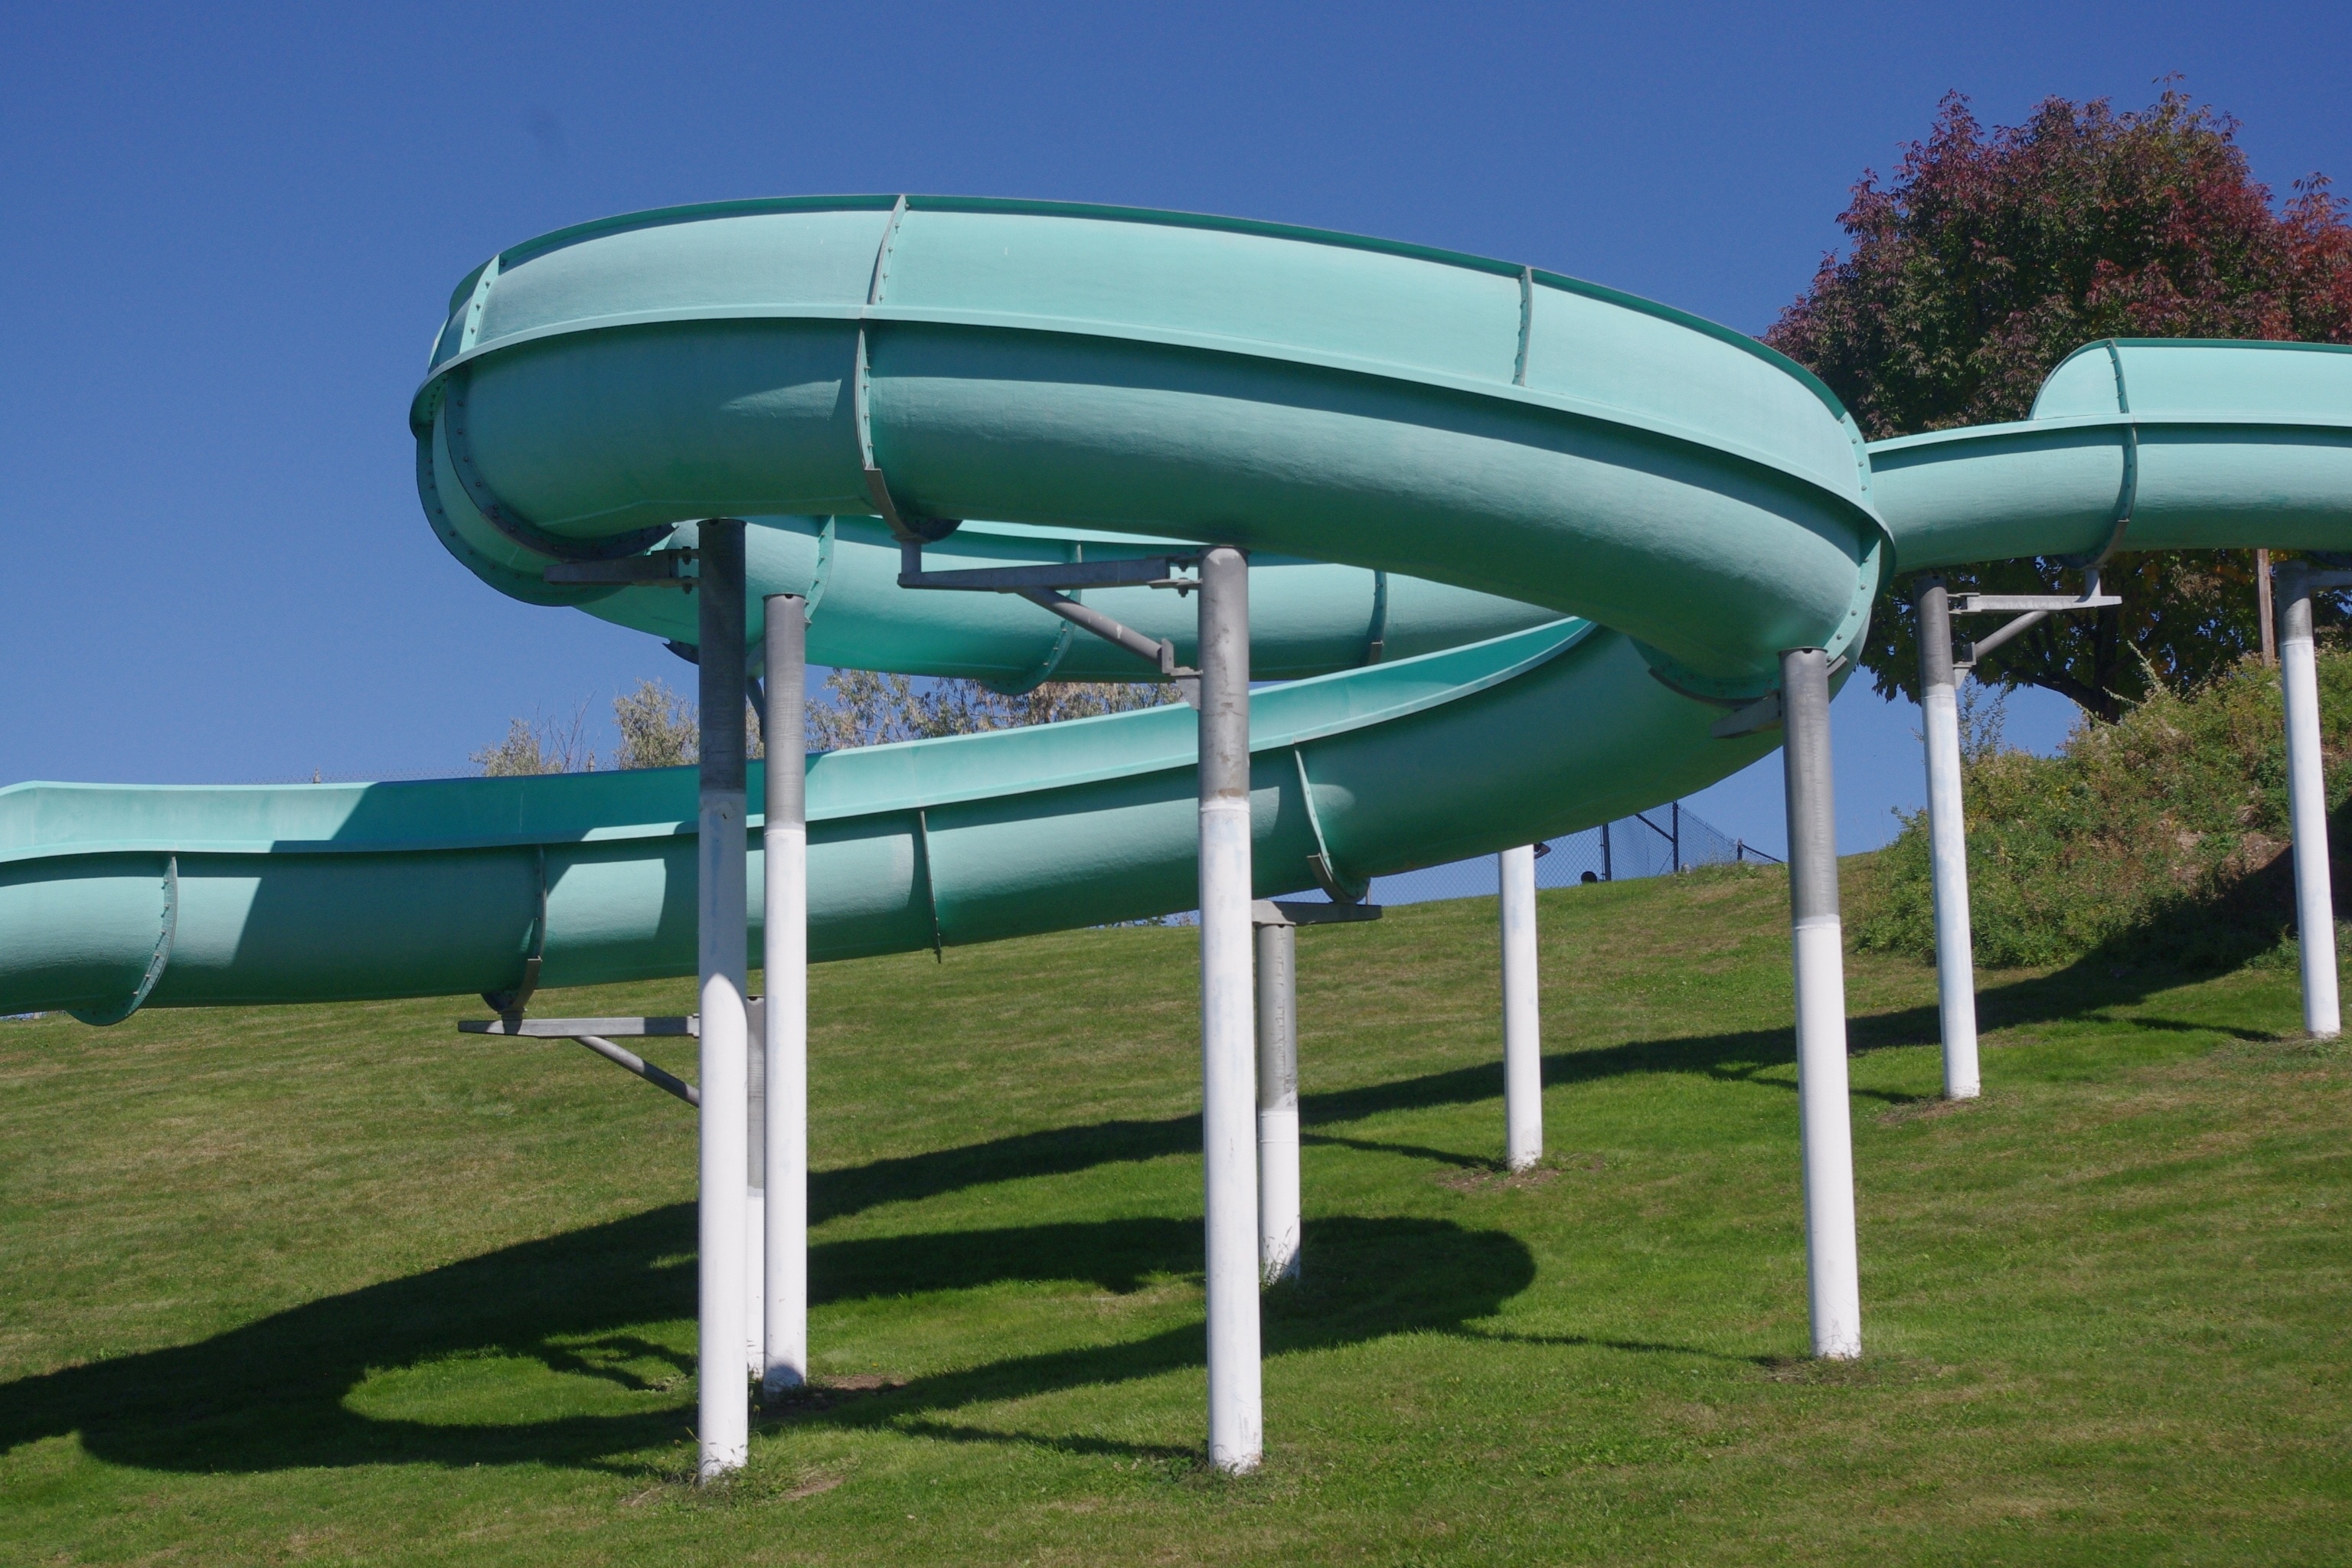 Water Slide, Slide, Amusement, Water, green color, swimming pool